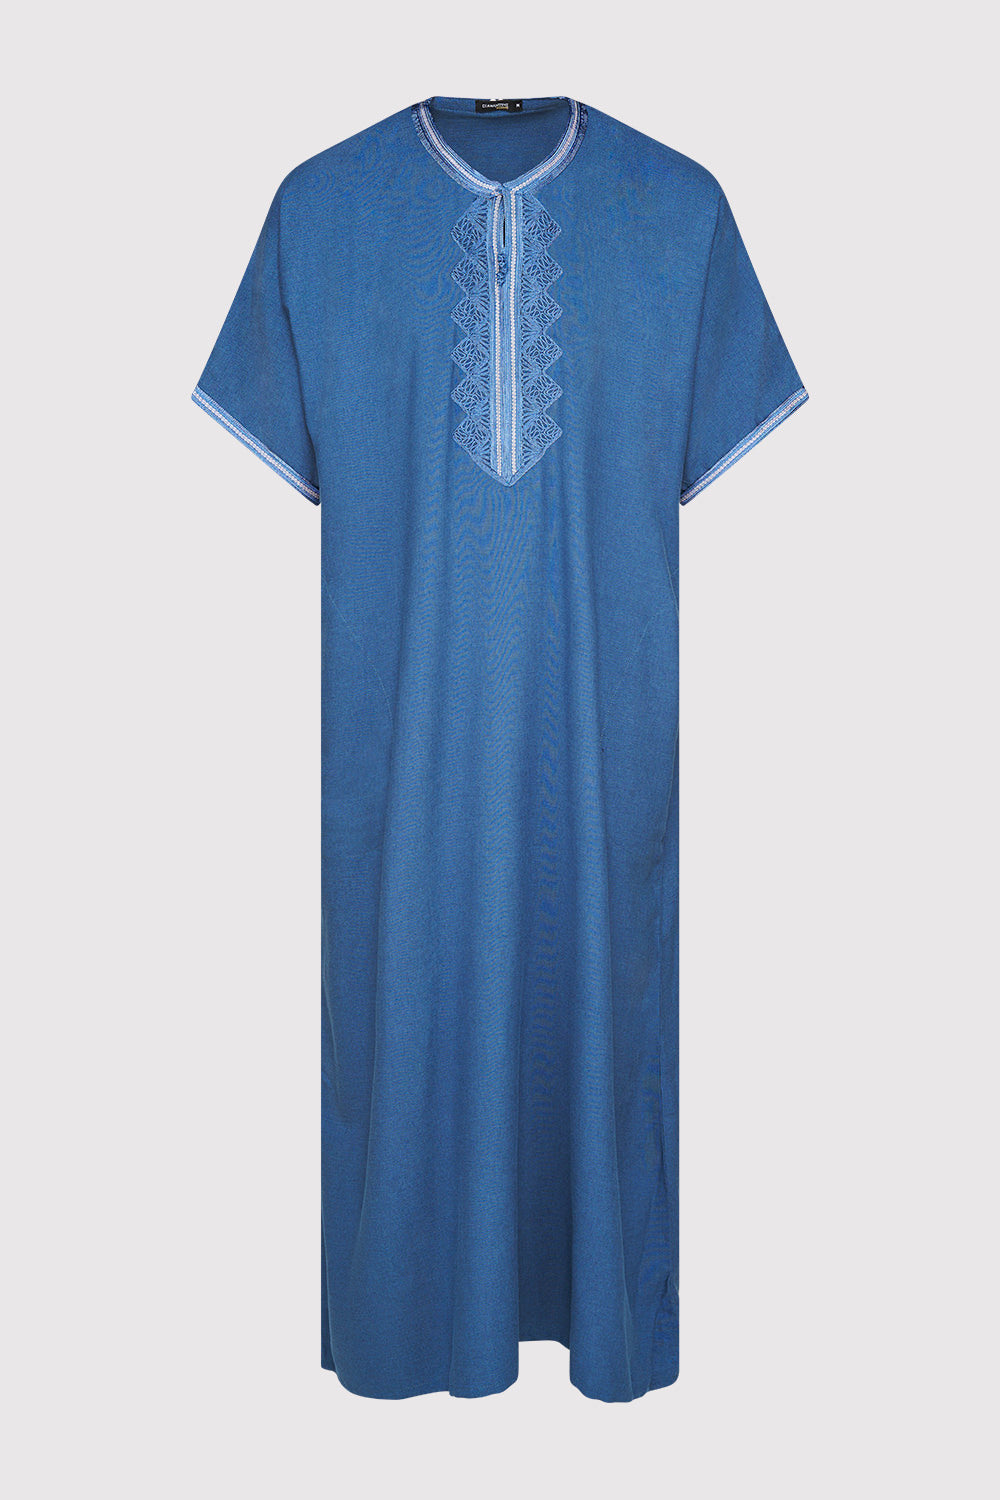 Gandoura Hassan Men's Short Sleeve Full-length Embroidered Robe Casual Thobe in Blue